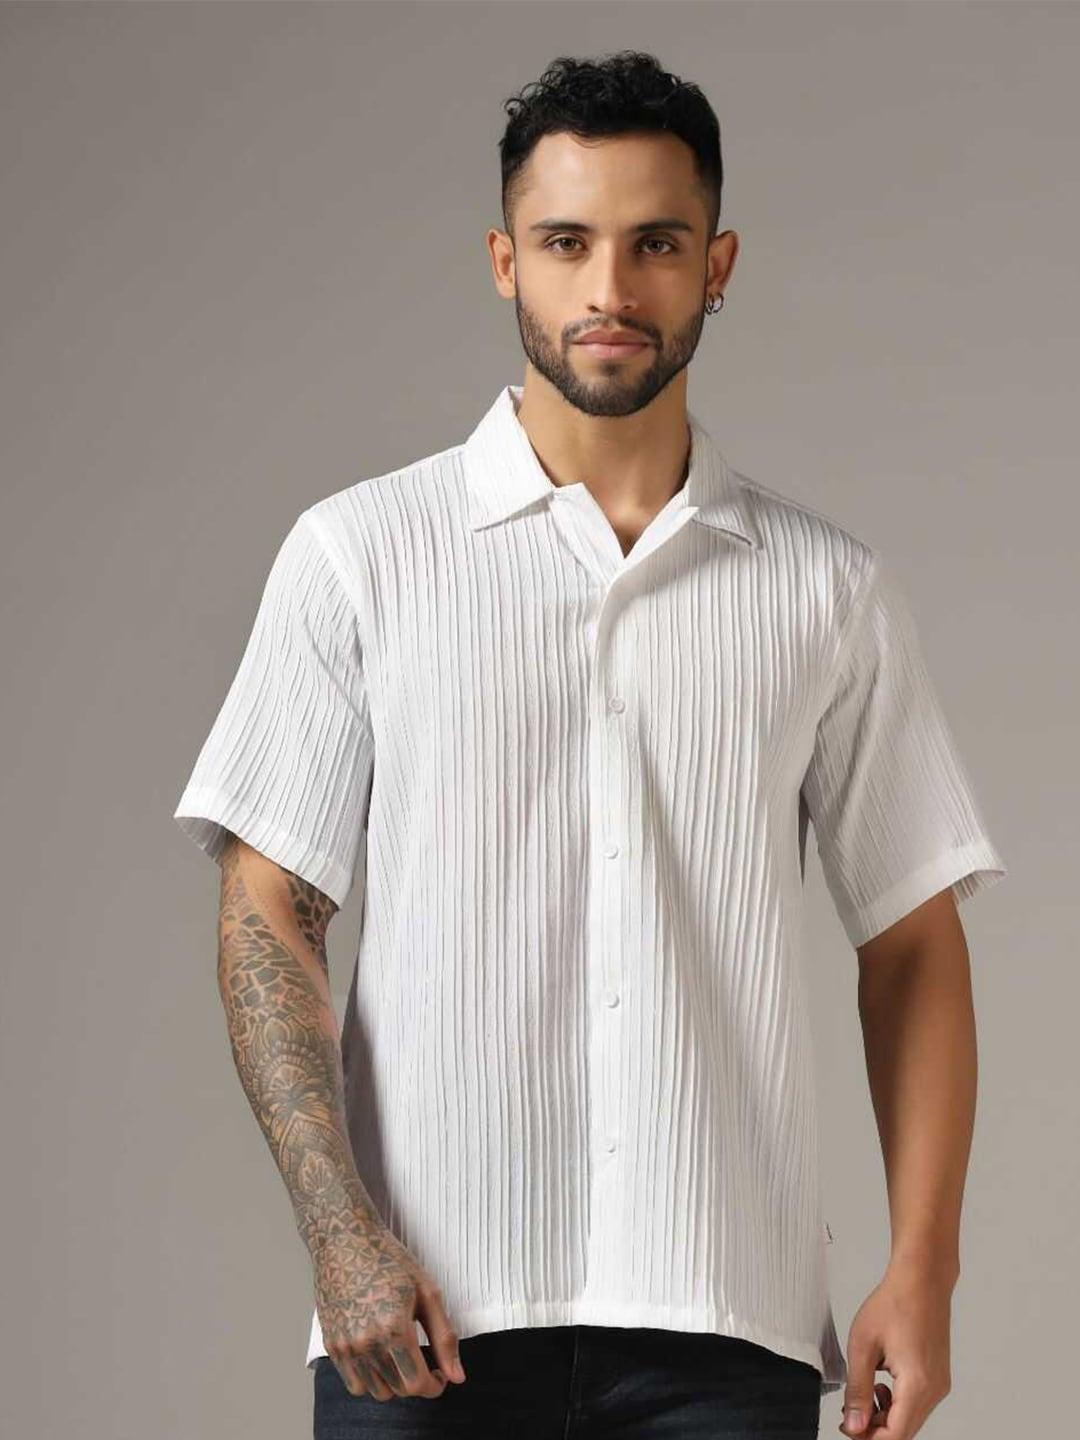 greciilooks-men-classic-opaque-striped-casual-shirt